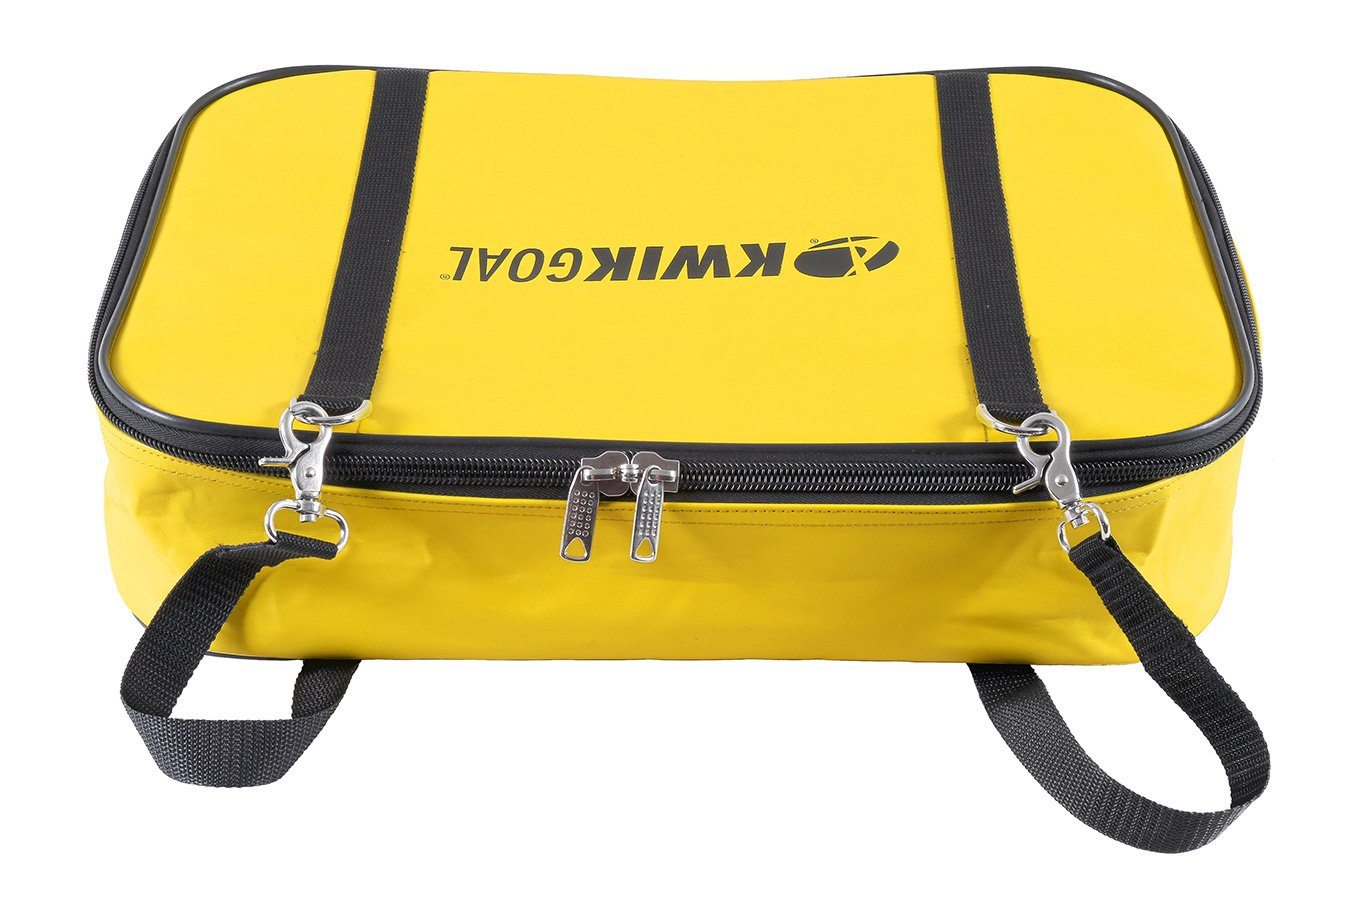 Kwikgoal Kwik Fill Anchor Bag | 10B59 Goal accessories Kwikgoal Hi-Vis Yellow 